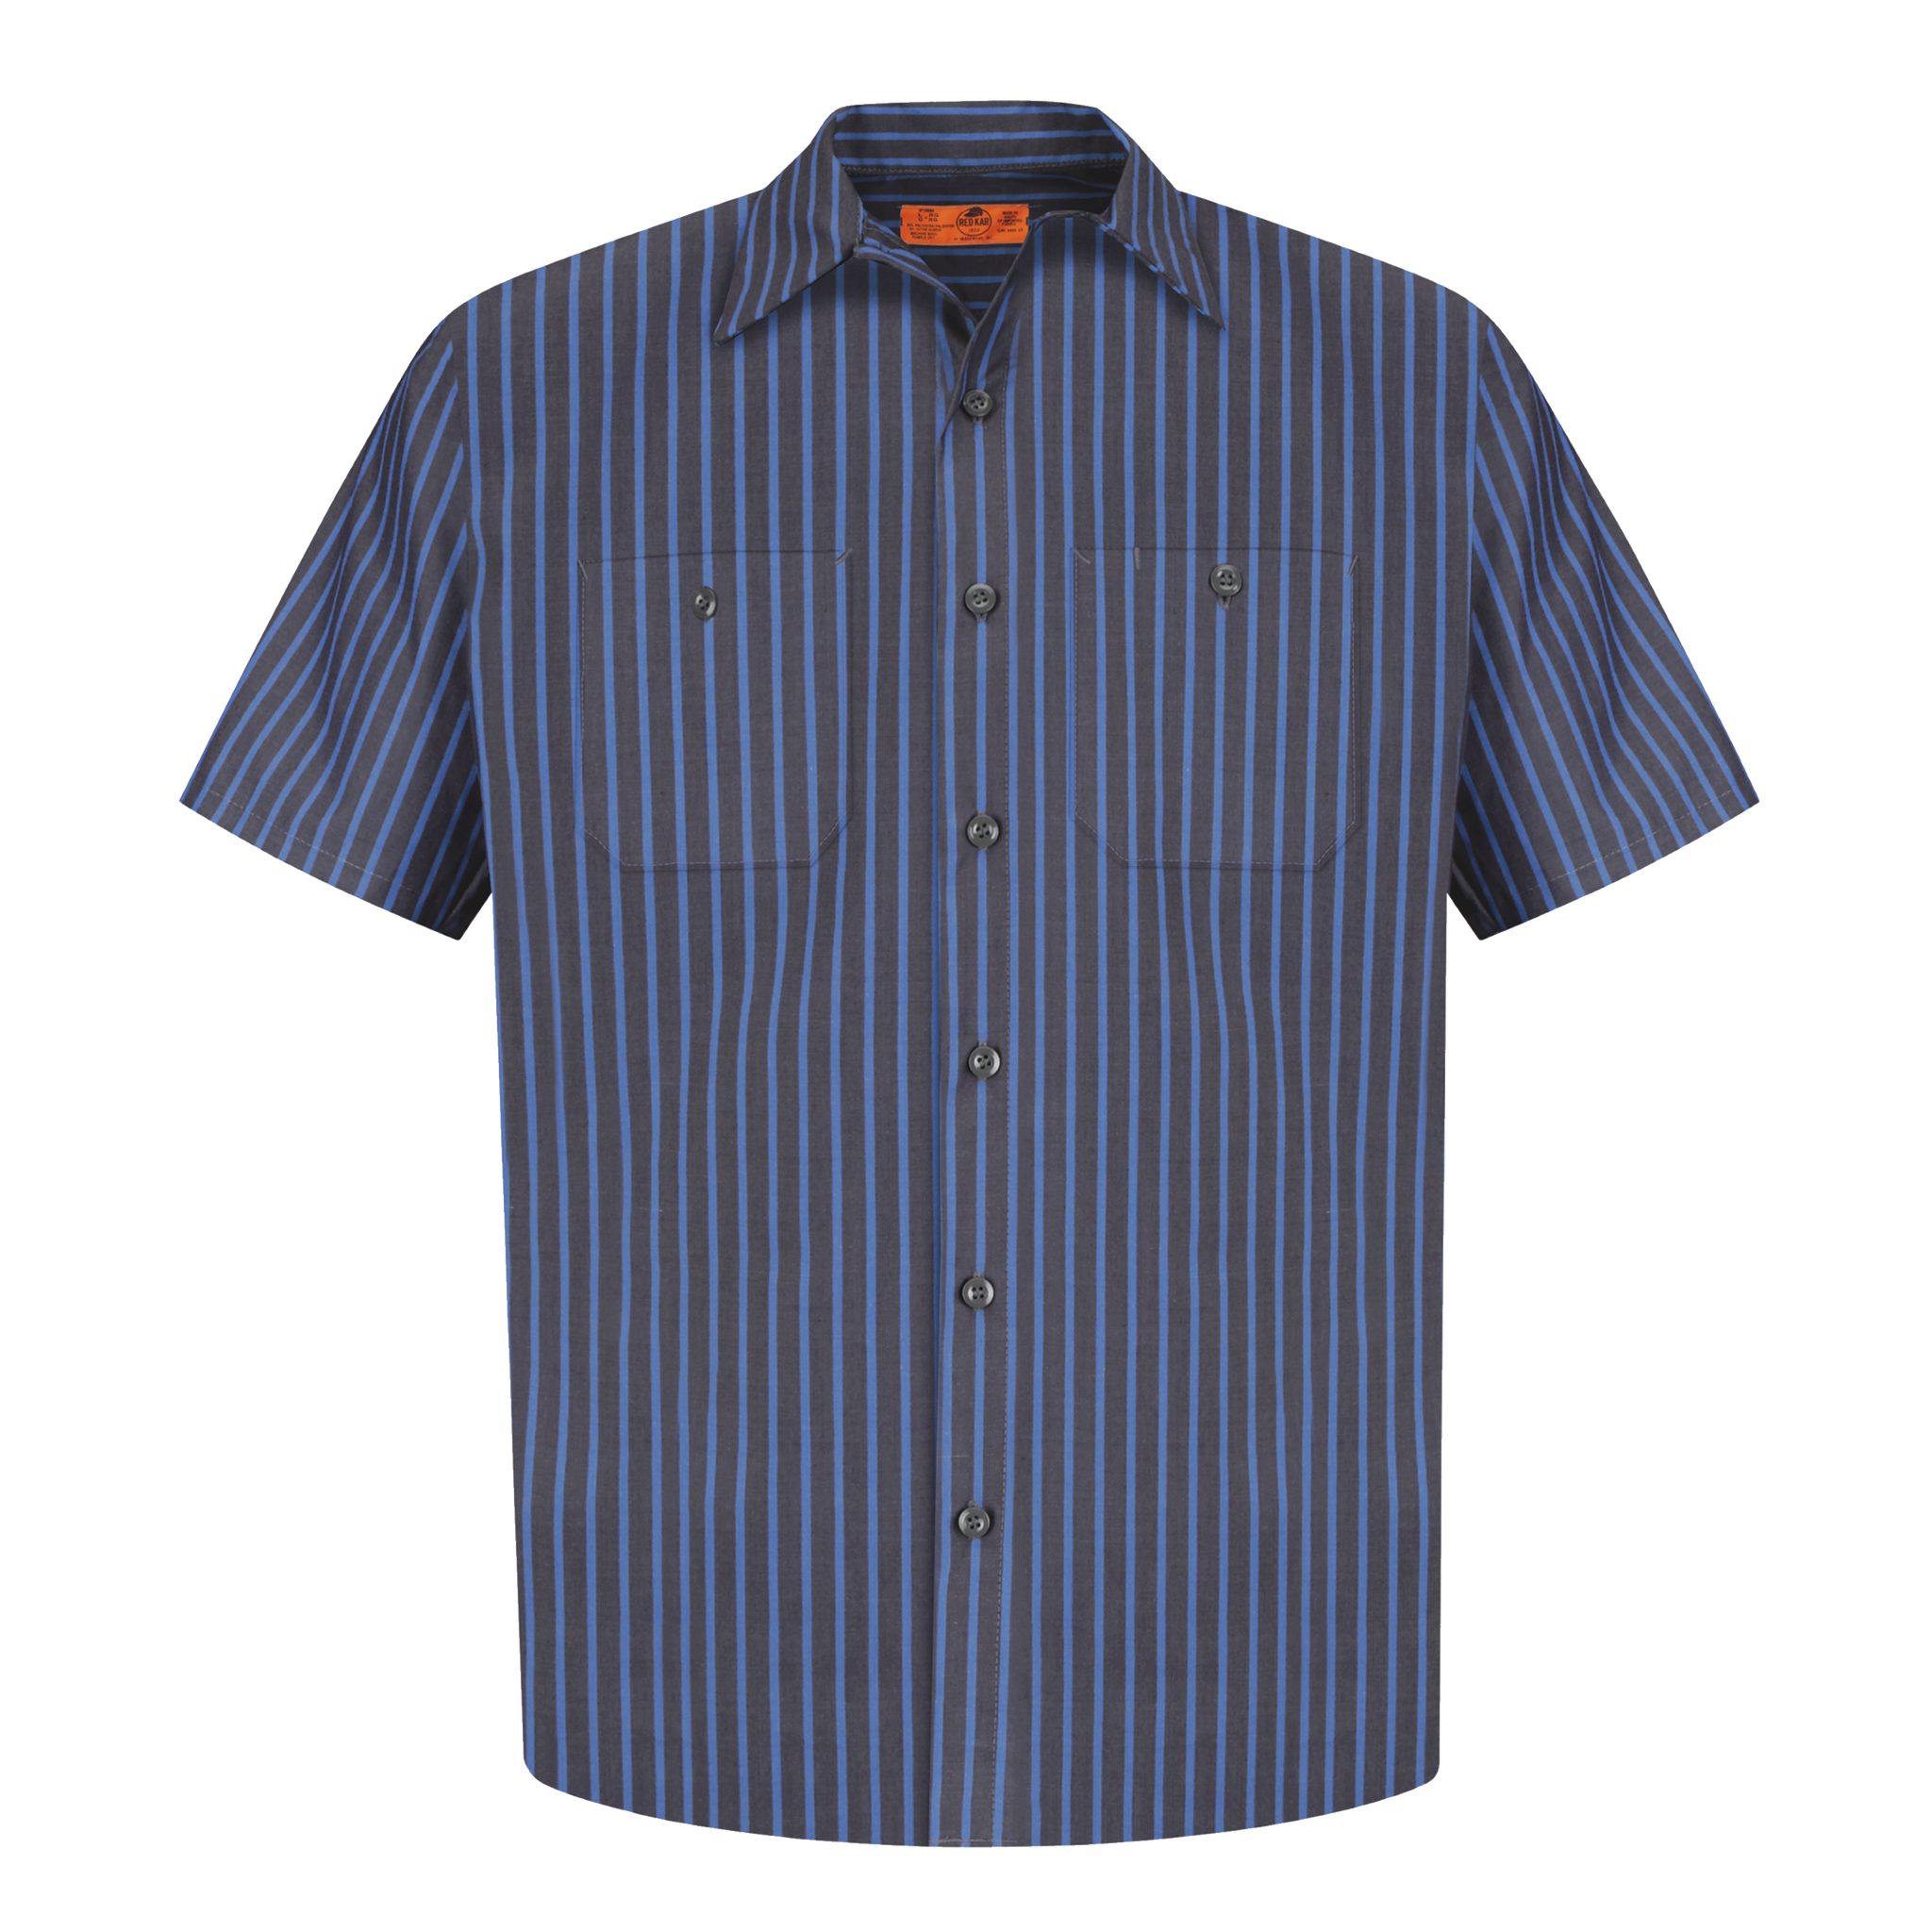 A2213 Mens Short Sleeve Striped Industrial Work Shirt